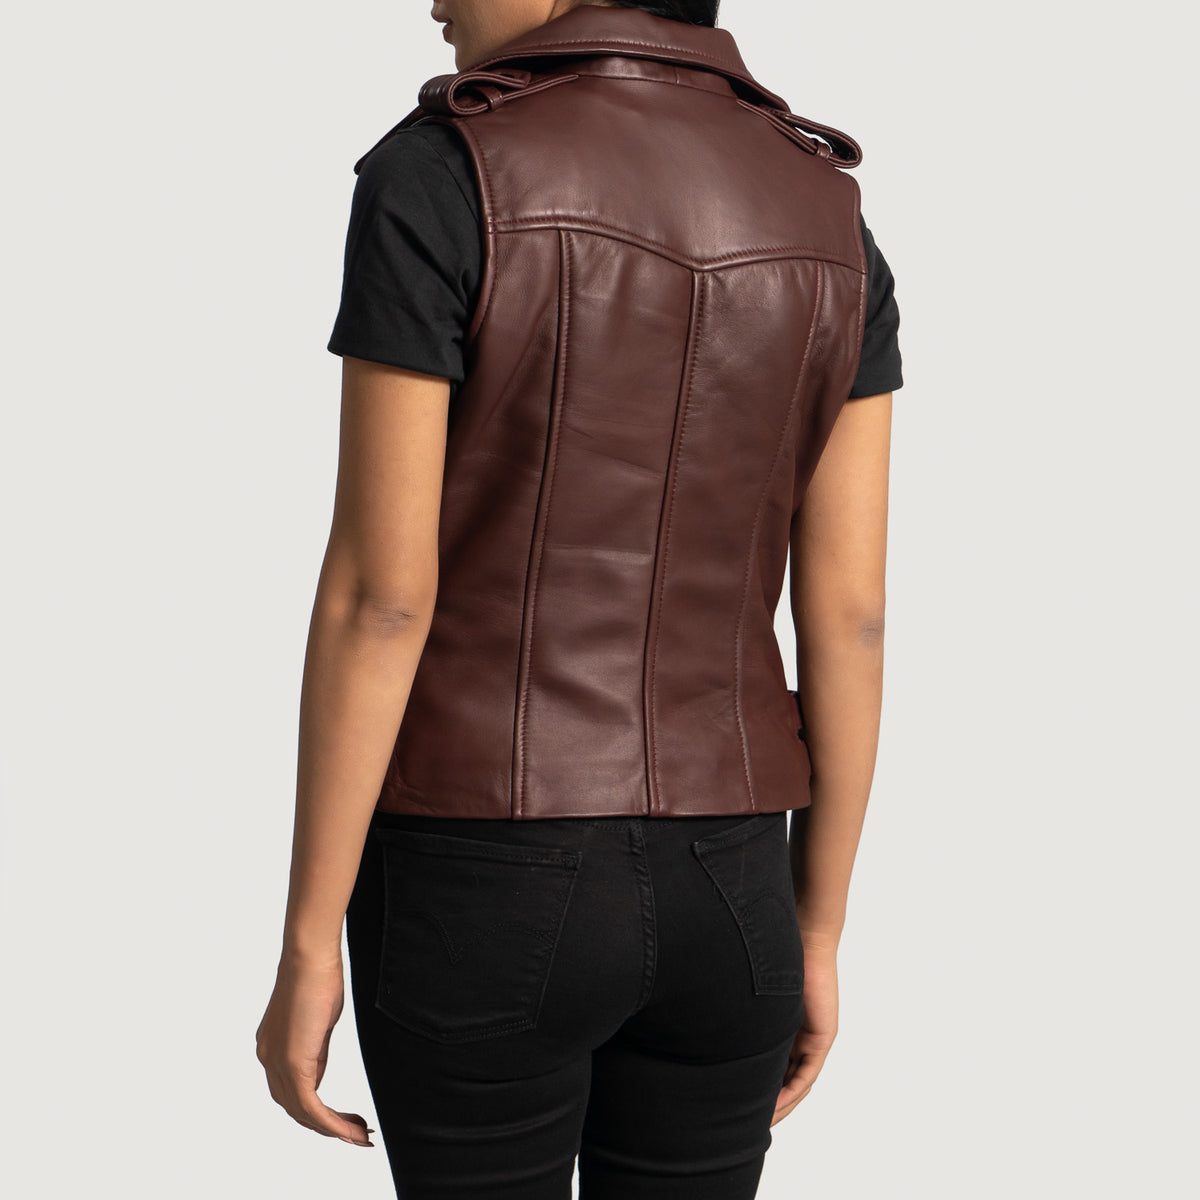 Ace Rhonda Maroon Leather Biker Vest Plus Size